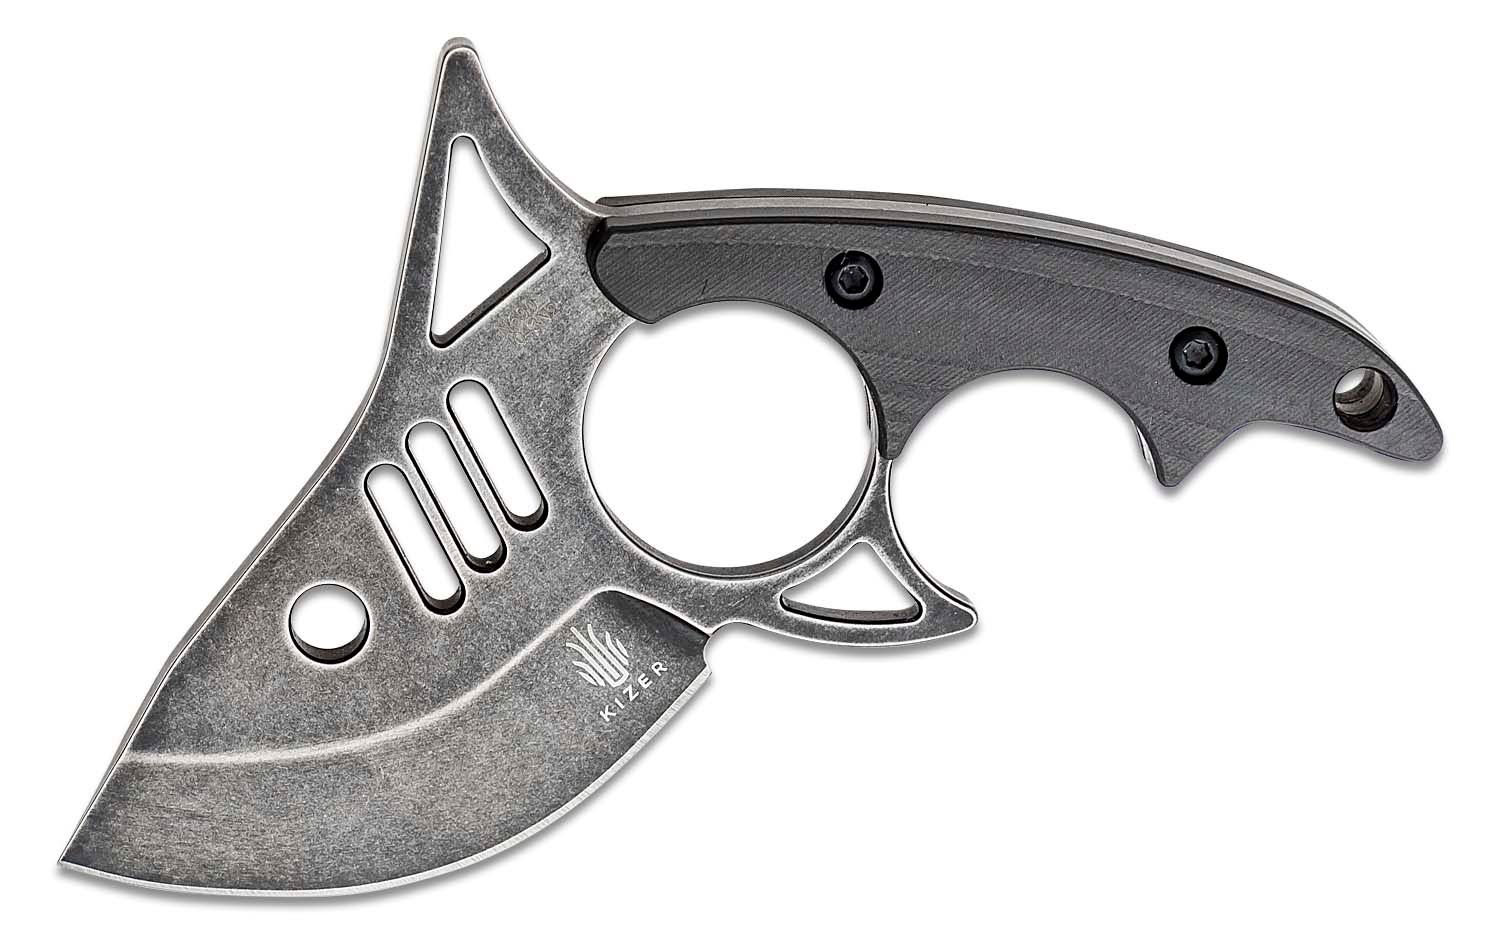 Kizer Cutlery 1043N2 Macho Blades The Shark Tooth Fixed Blade Knife 2.8  N690 Black Drop Point, Carbon Fiber Handles, Kydex Pocket Sheath -  KnifeCenter